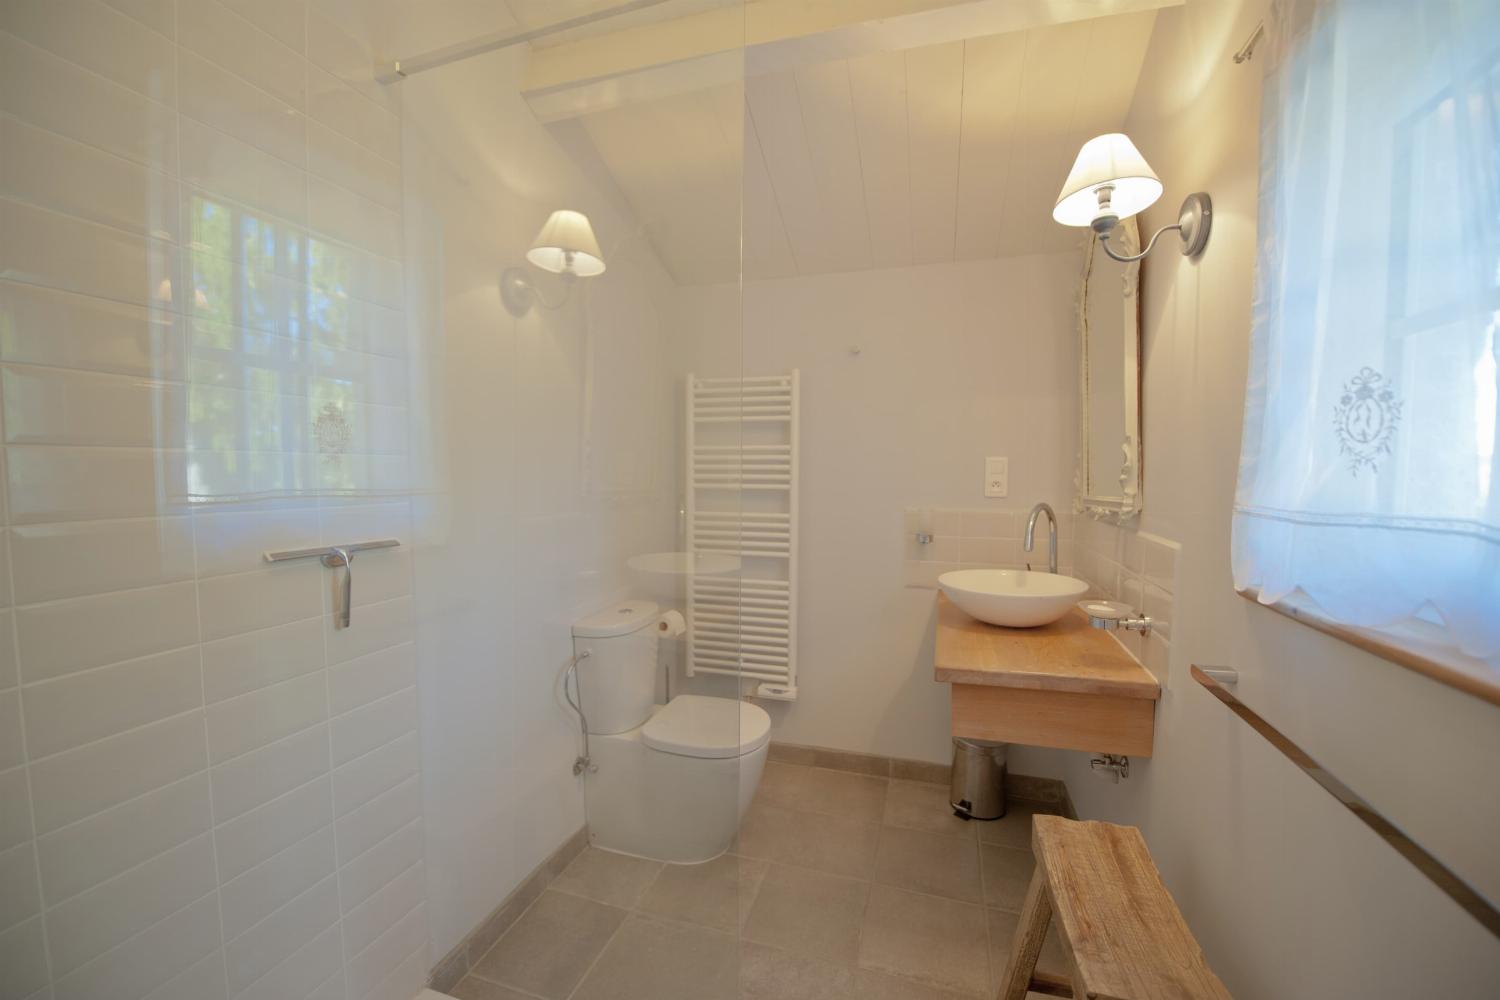 Bathroom | Rental home in Lot-et-Garonne